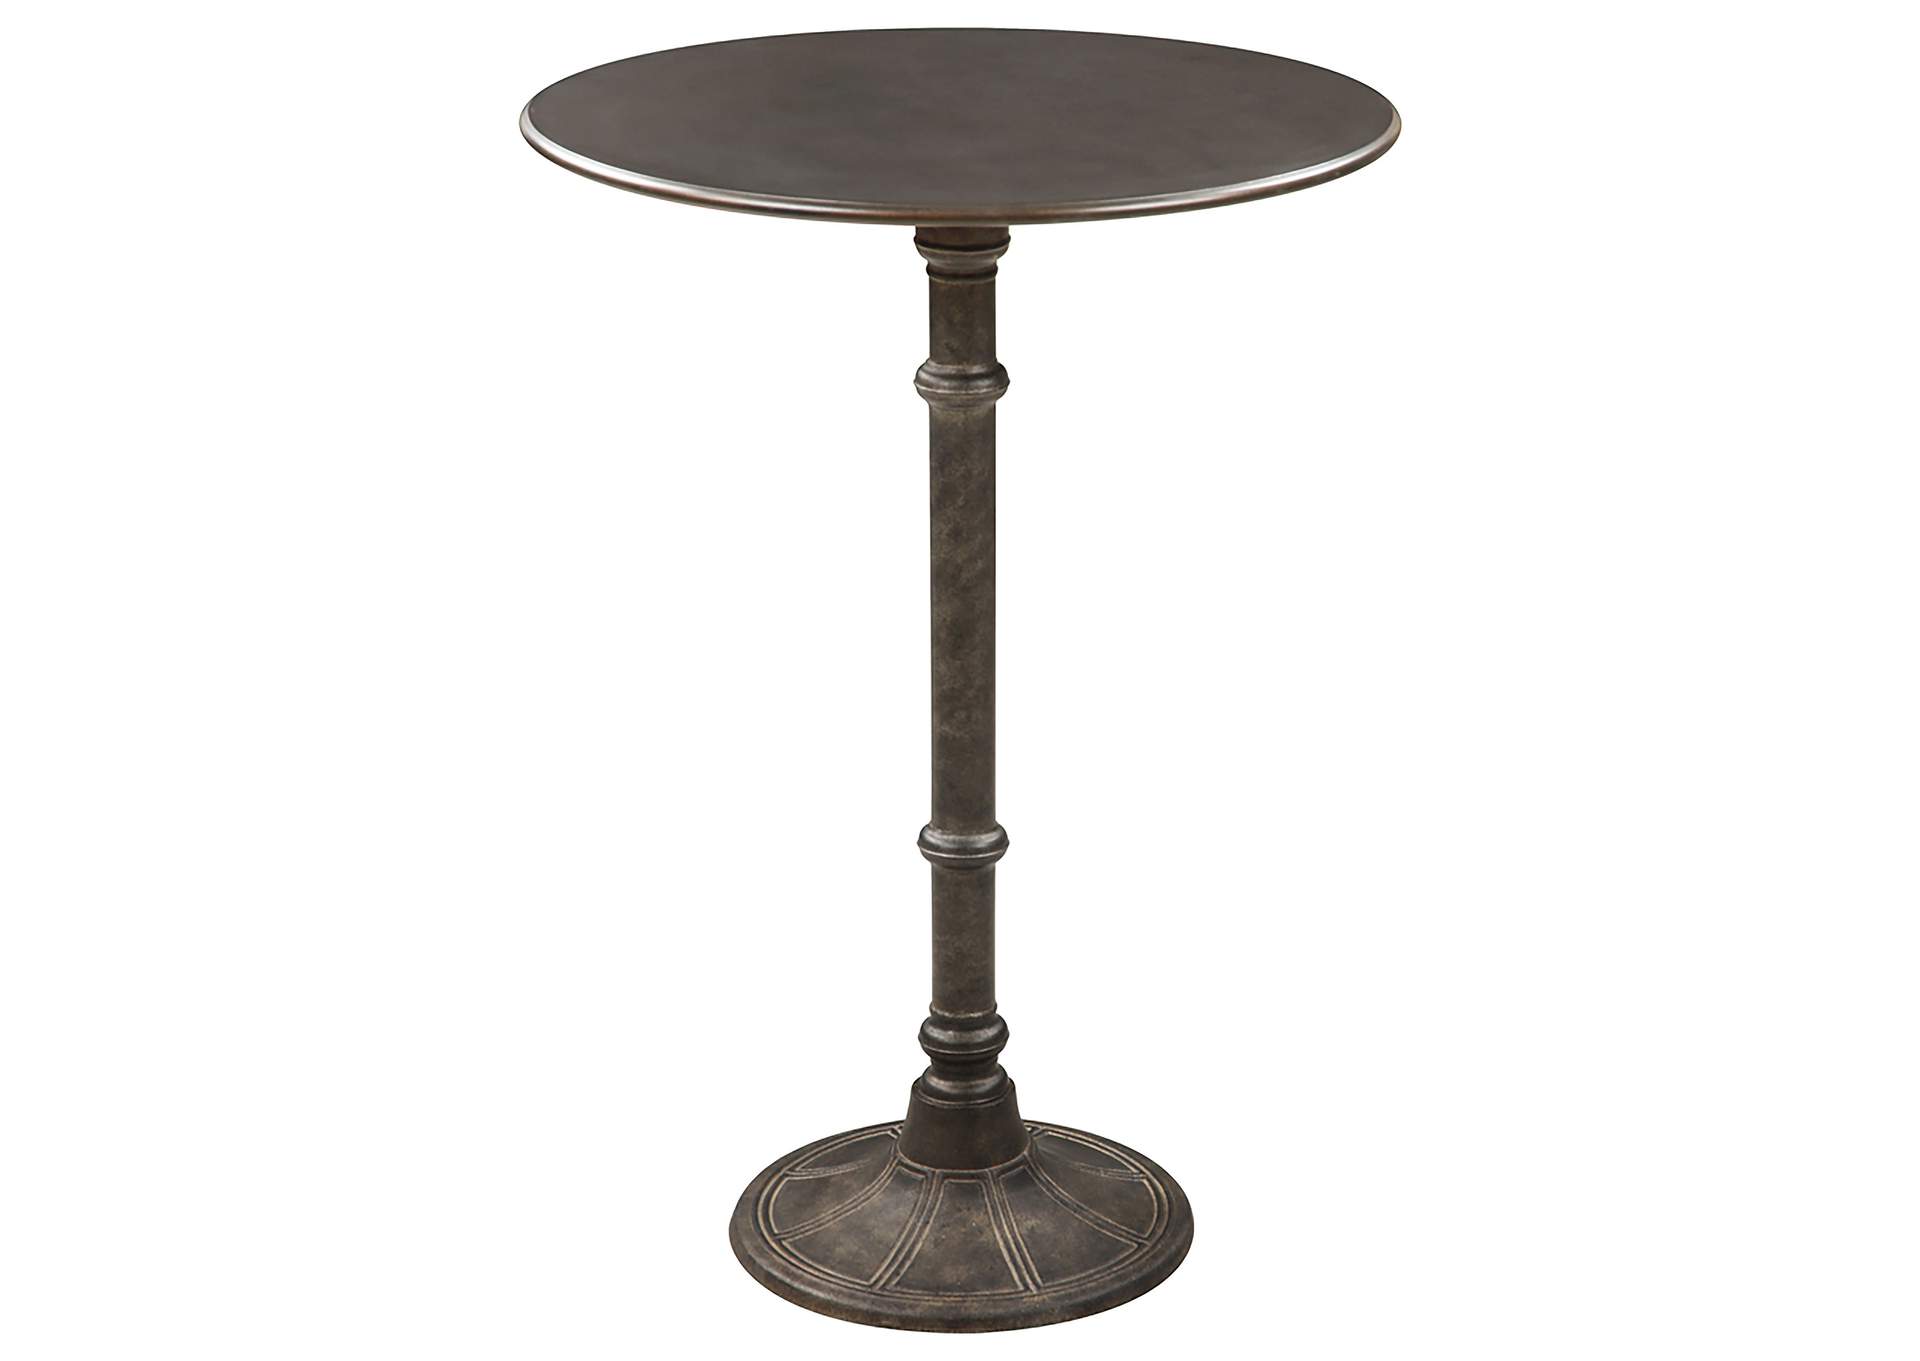 Danbury Round Bar Table Dark Russet and Antique Bronze,Coaster Furniture